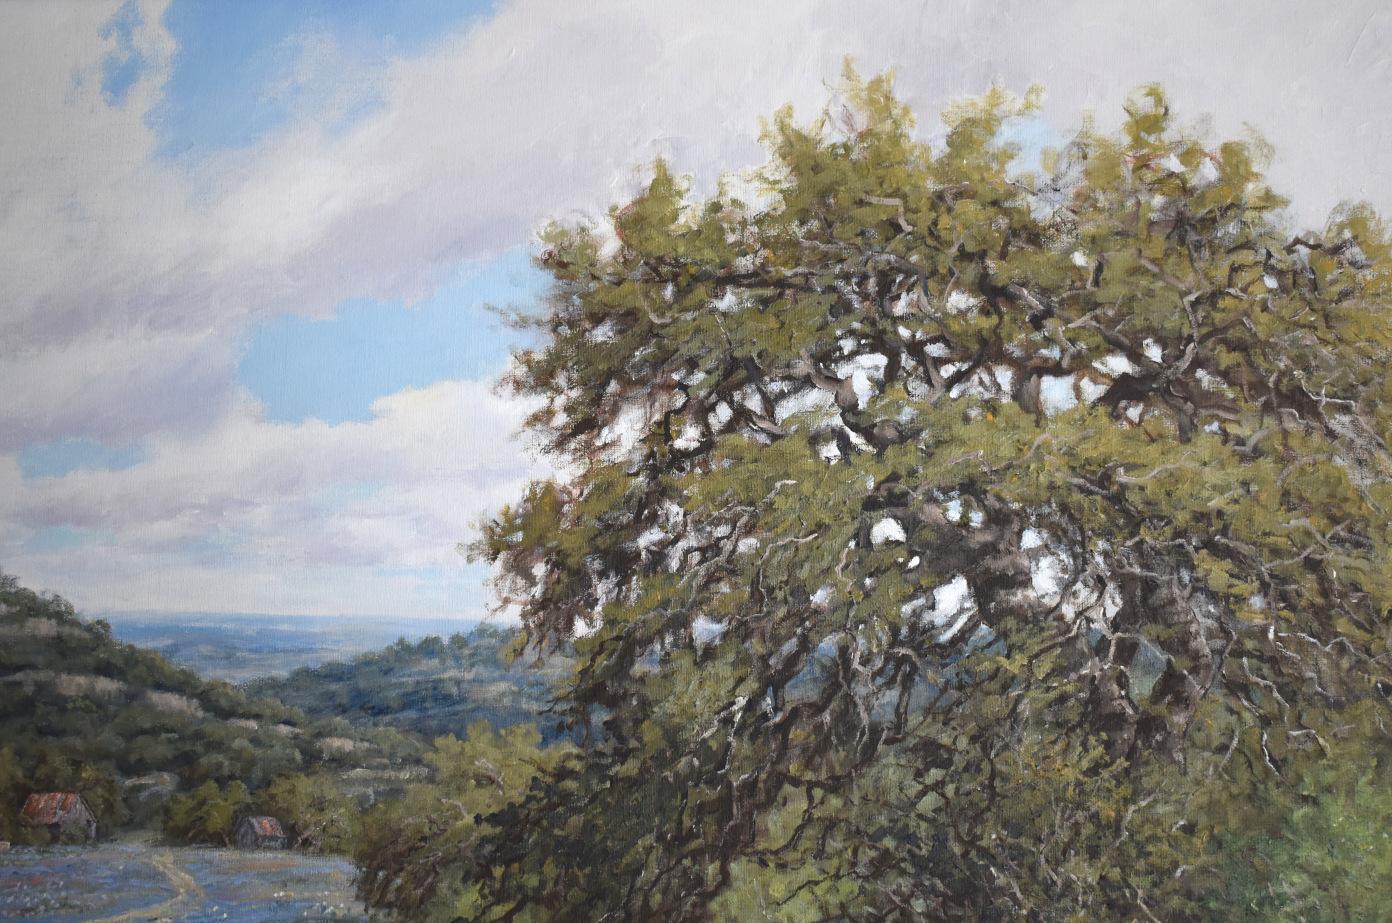 Robert Harrison
(Born 1949)
San Antonio Artist
Image Size: 30 x 40
Frame Size: 38 x 48
Medium: Oil on Canvas
